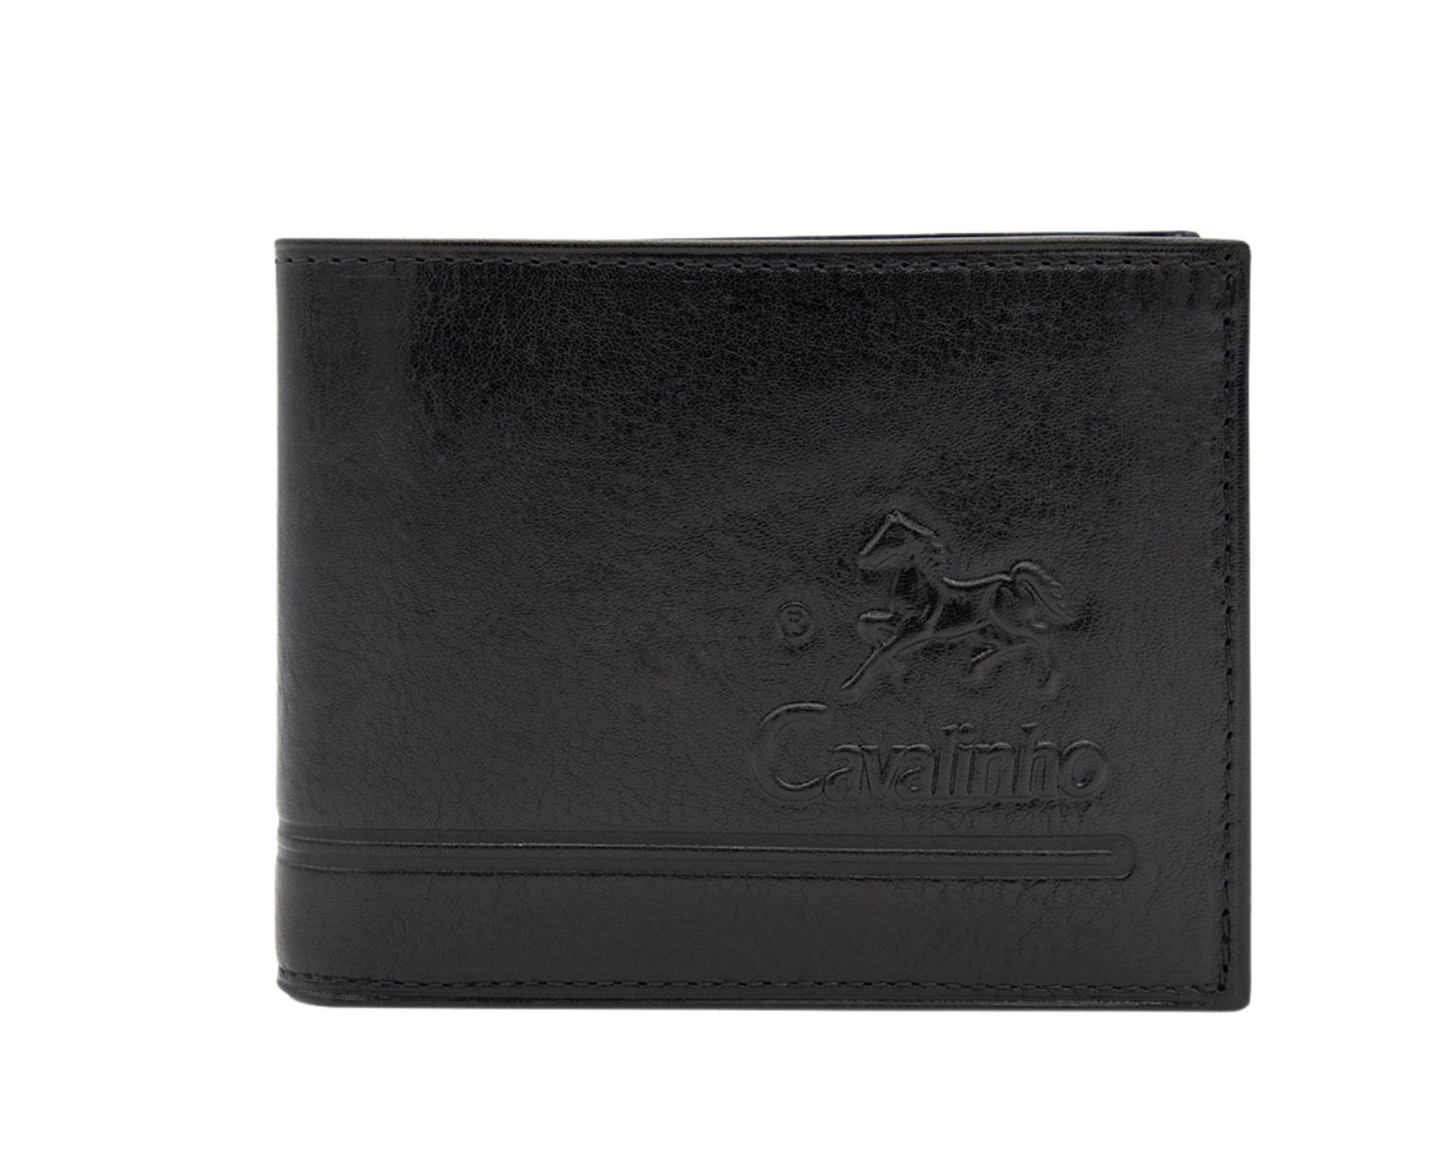 Cavalinho Men's Trifold Leather Wallet - Black - 28610507.01_1